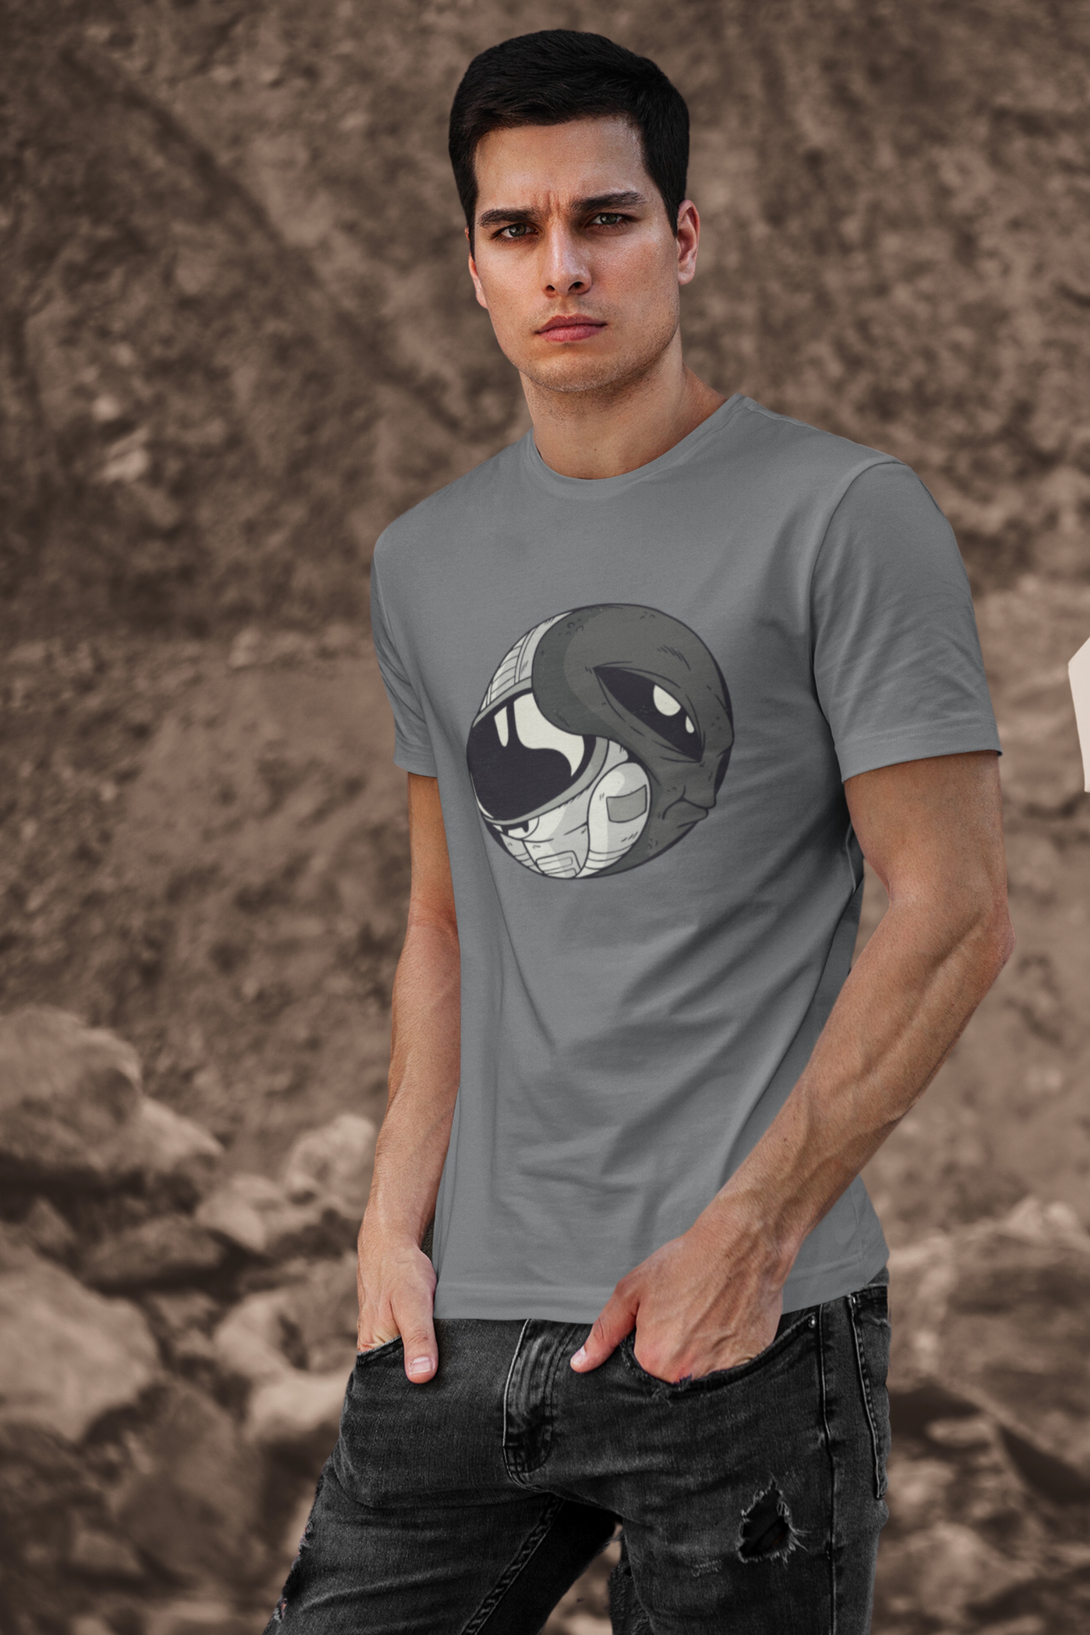 Alien Astronaut Printed T-Shirt For Men - WowWaves - 3